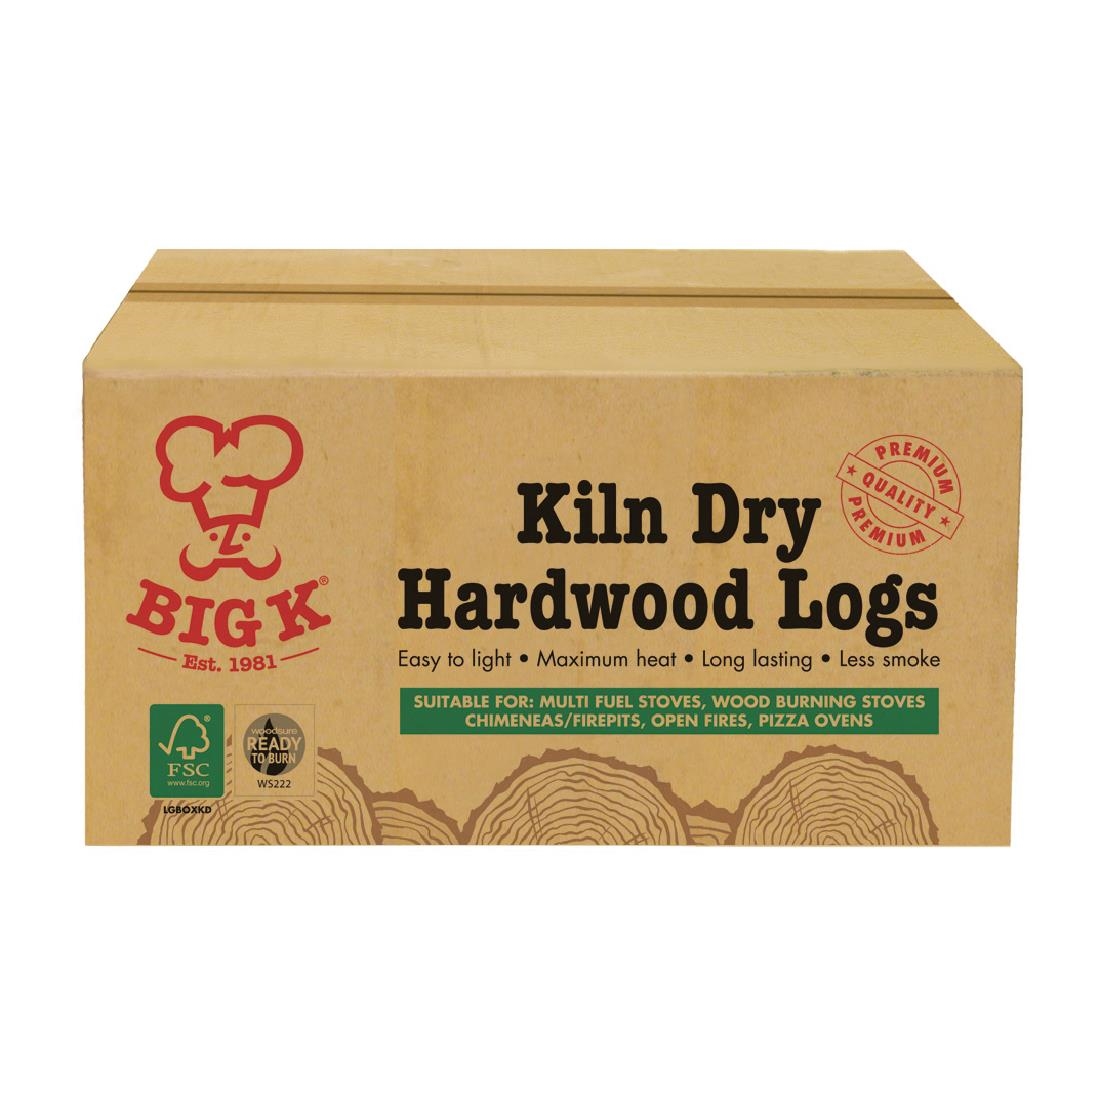 Big K Kiln Dry Hardwood Logs FSC Box 8Kg